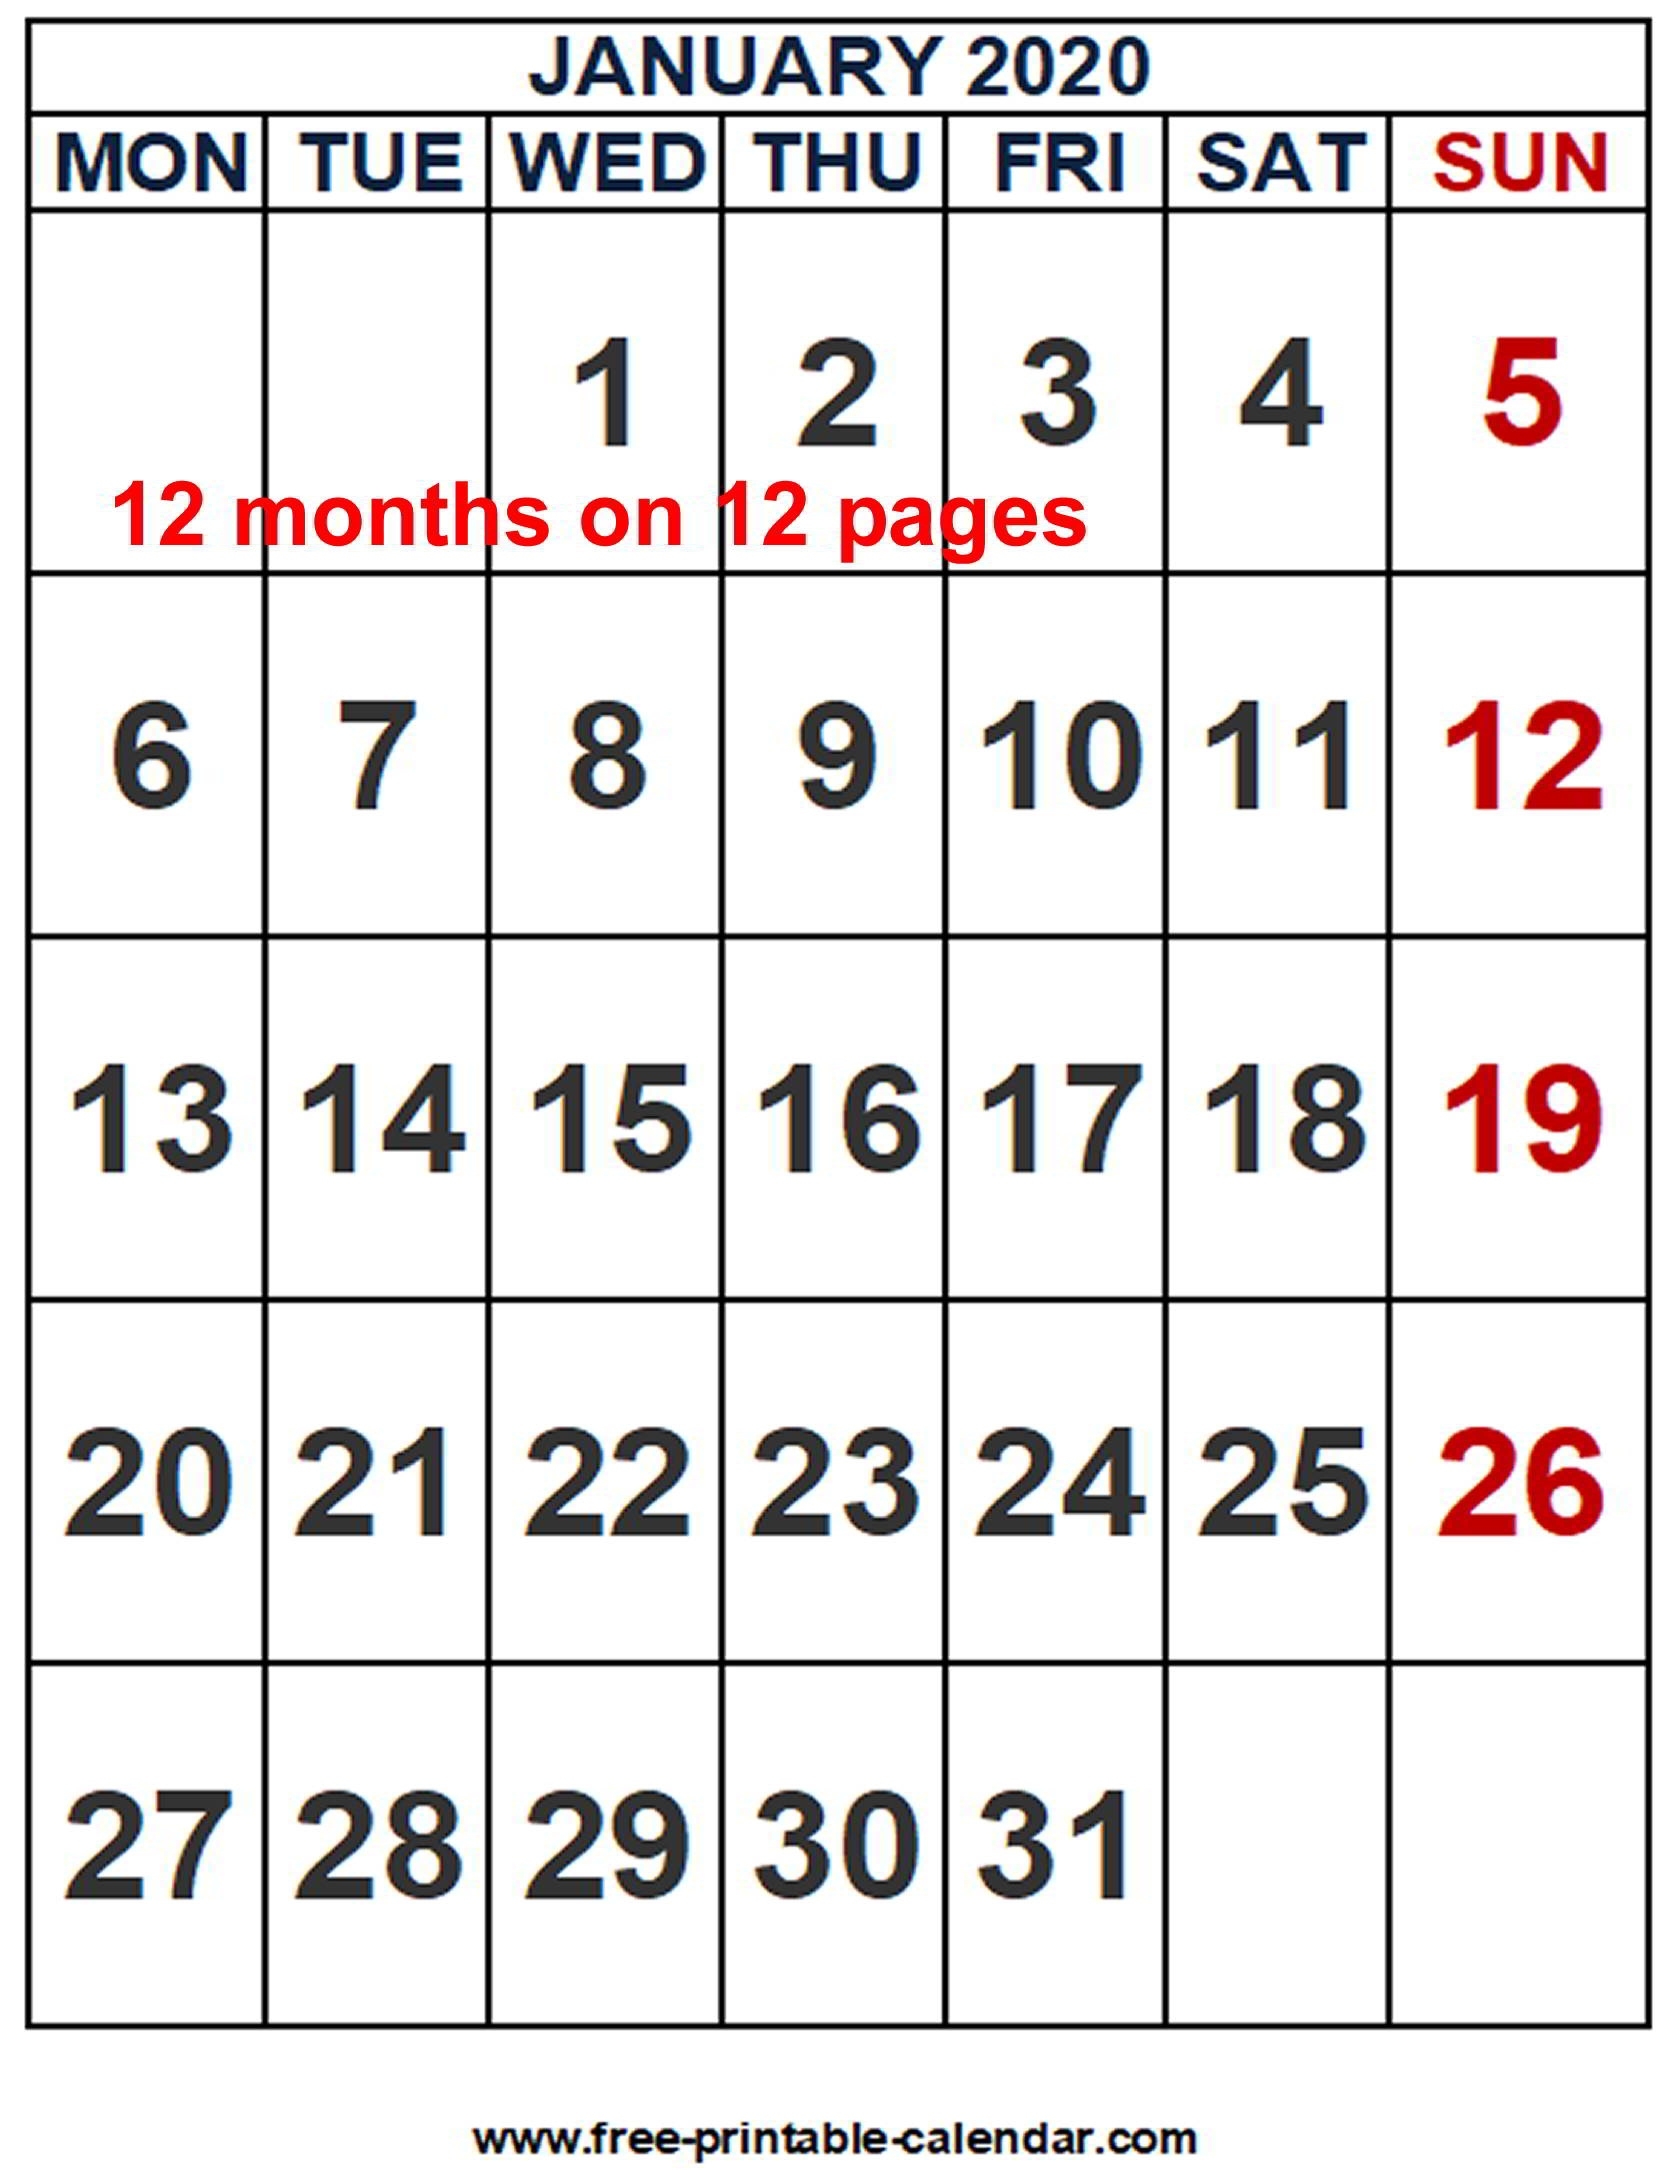 2020 Calendar Word Template - Free-Printable-Calendar Extraordinary Microsoft Word 2020 Monthly Calendar Template